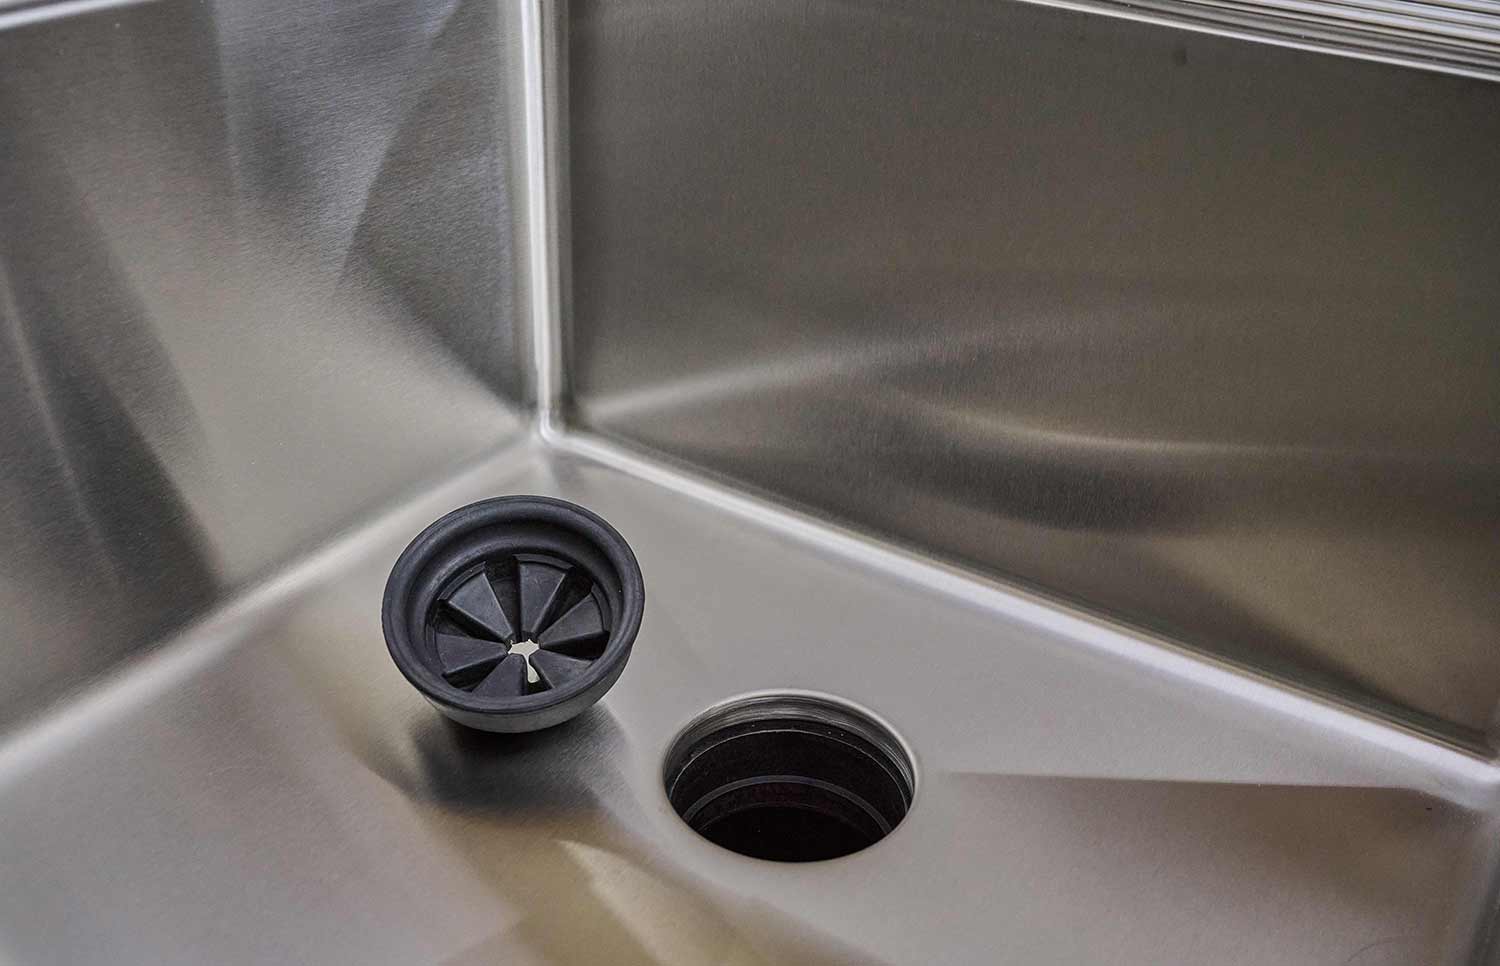 Create Good Sinks seamless undermount drain with removable dishwasher safe splash guard